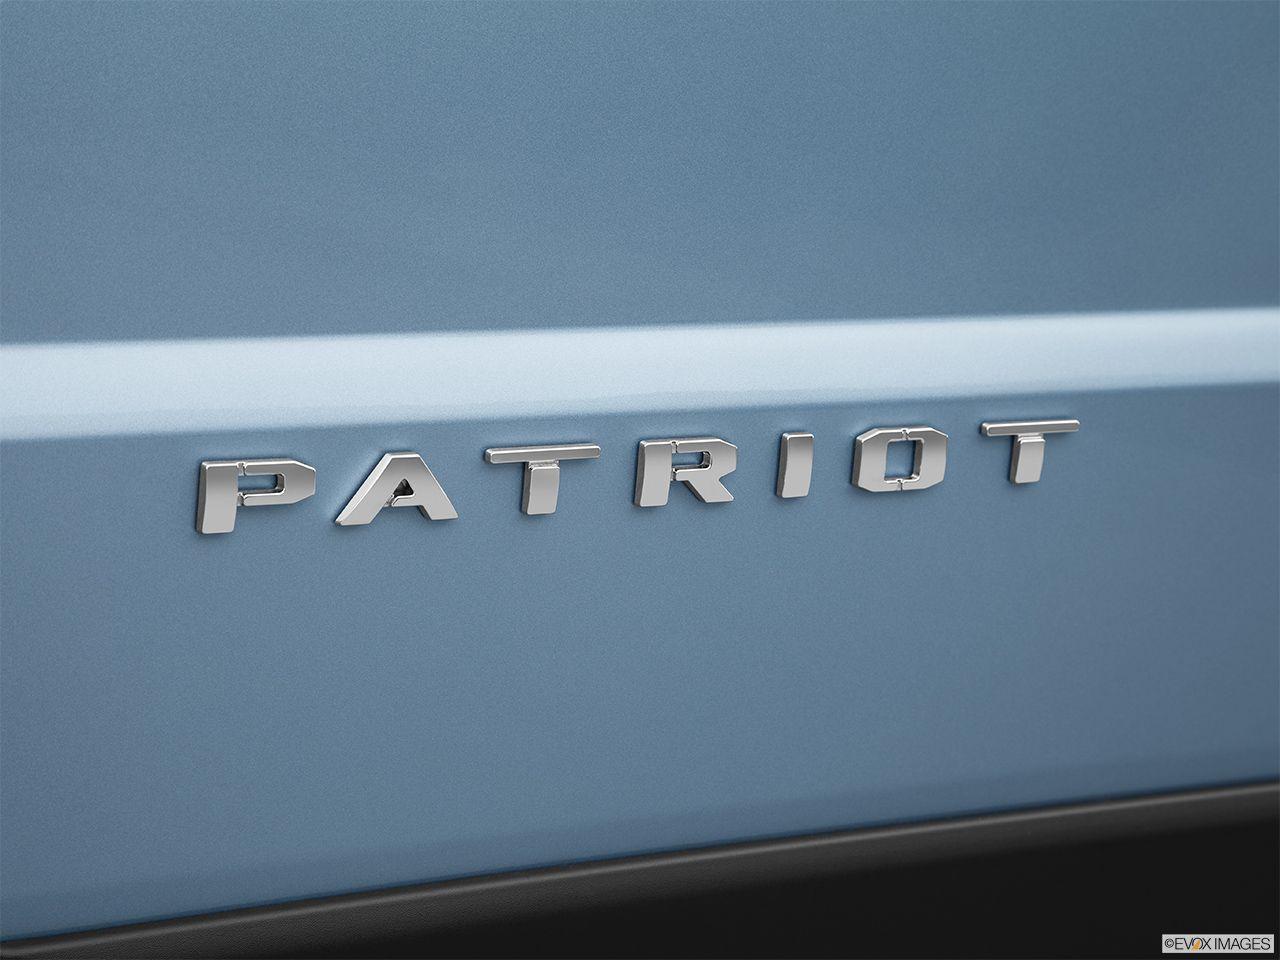 Jeep Patriot Logo - 2015 Jeep Patriot 4WD 4 Door Latitude - Front angle view 2015 Jeep ...